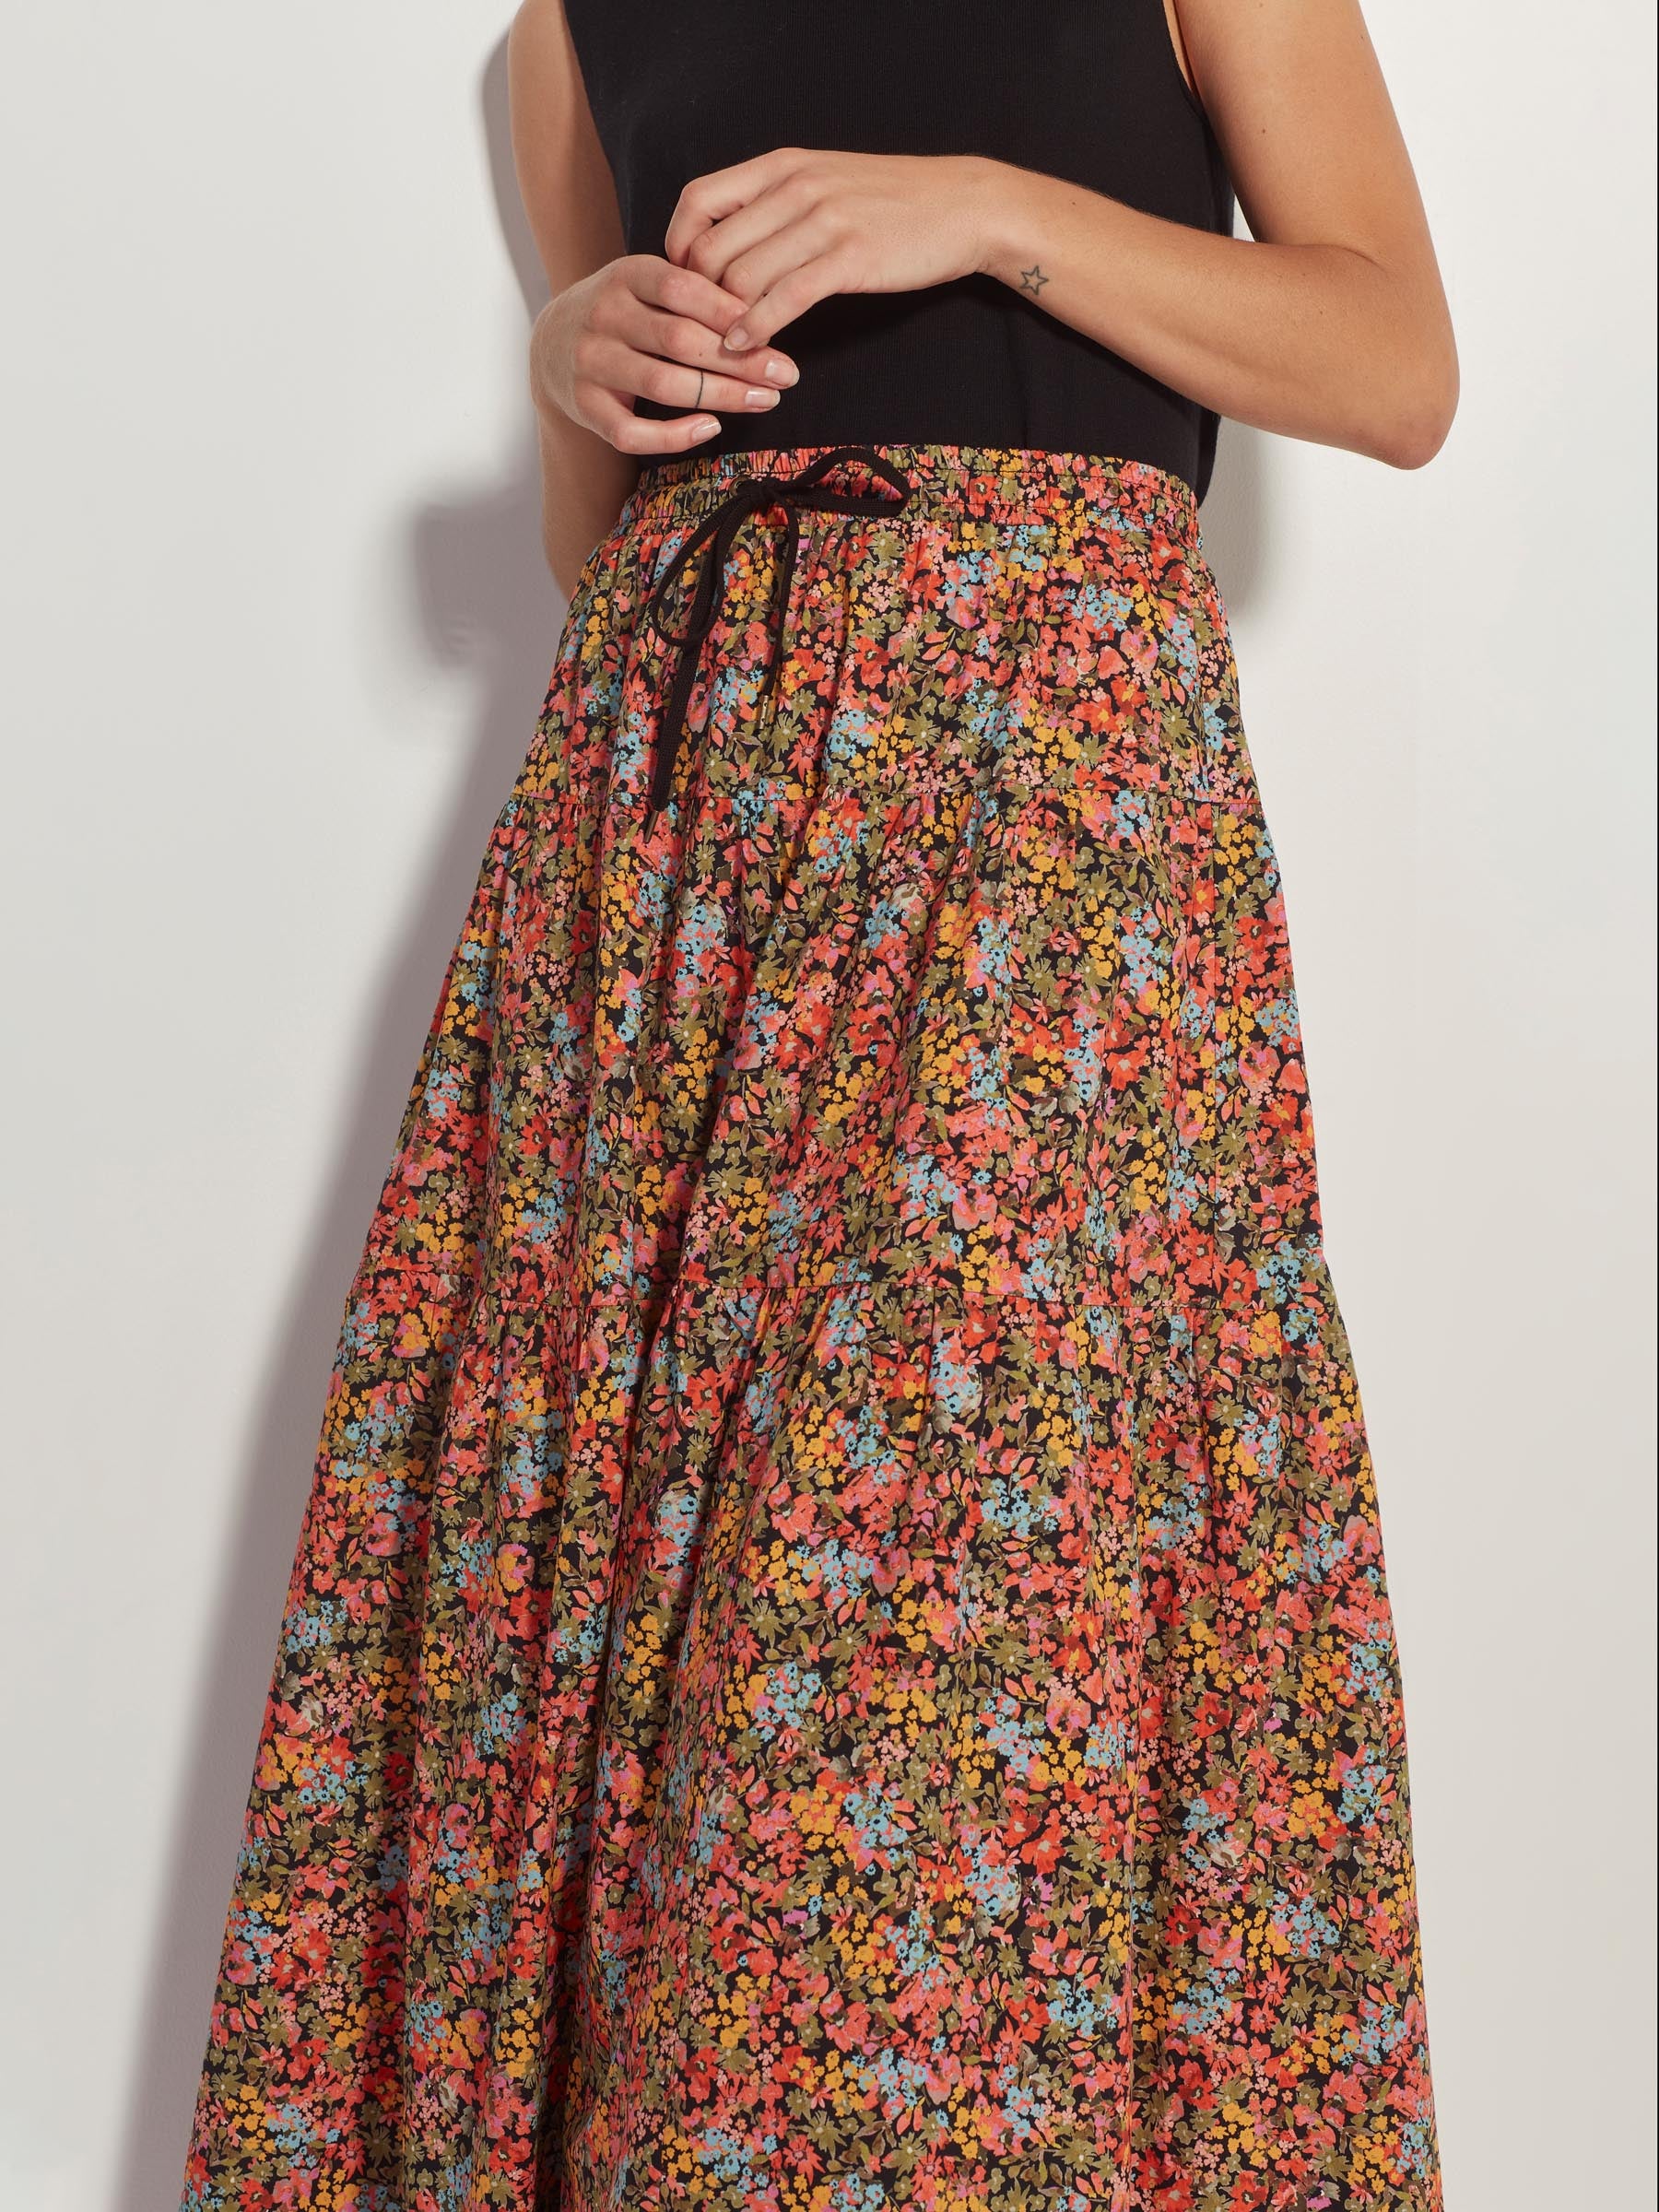 Nova Skirt (Pop Floral Cotton) Brights